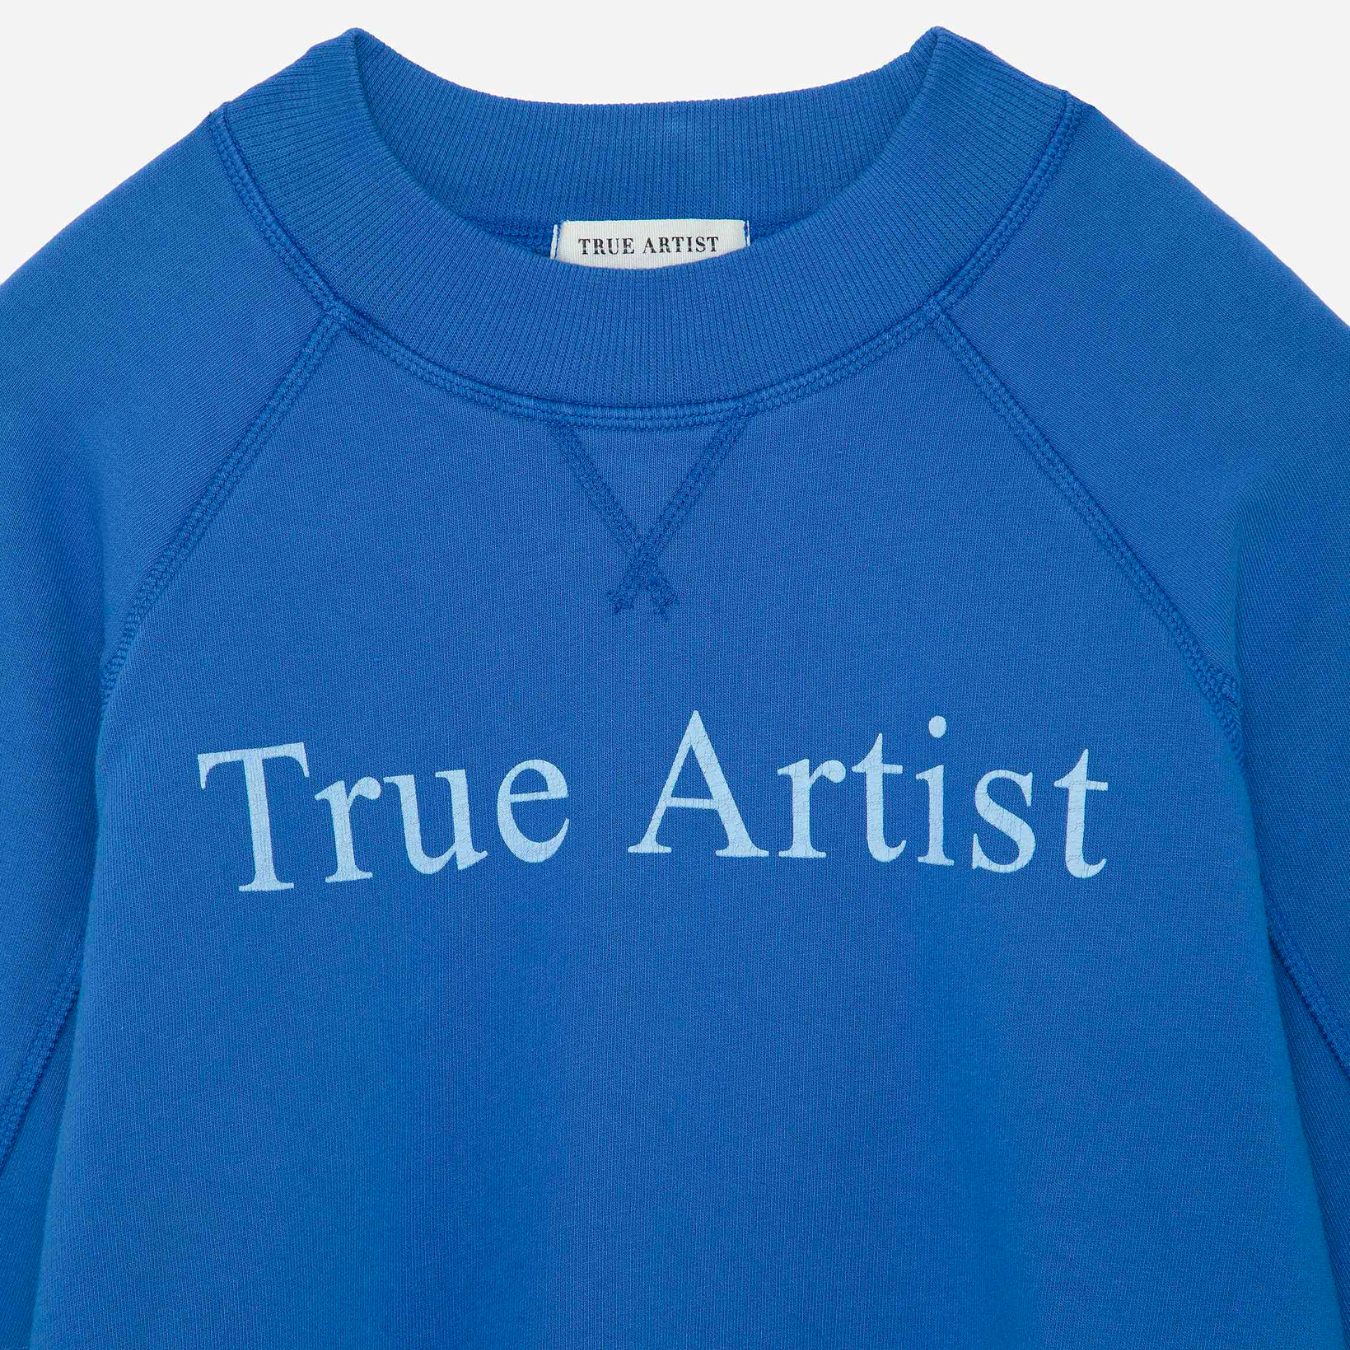 TRUE ARTIST SWEATSHIRT Nº01: SAPPHIRE BLUE